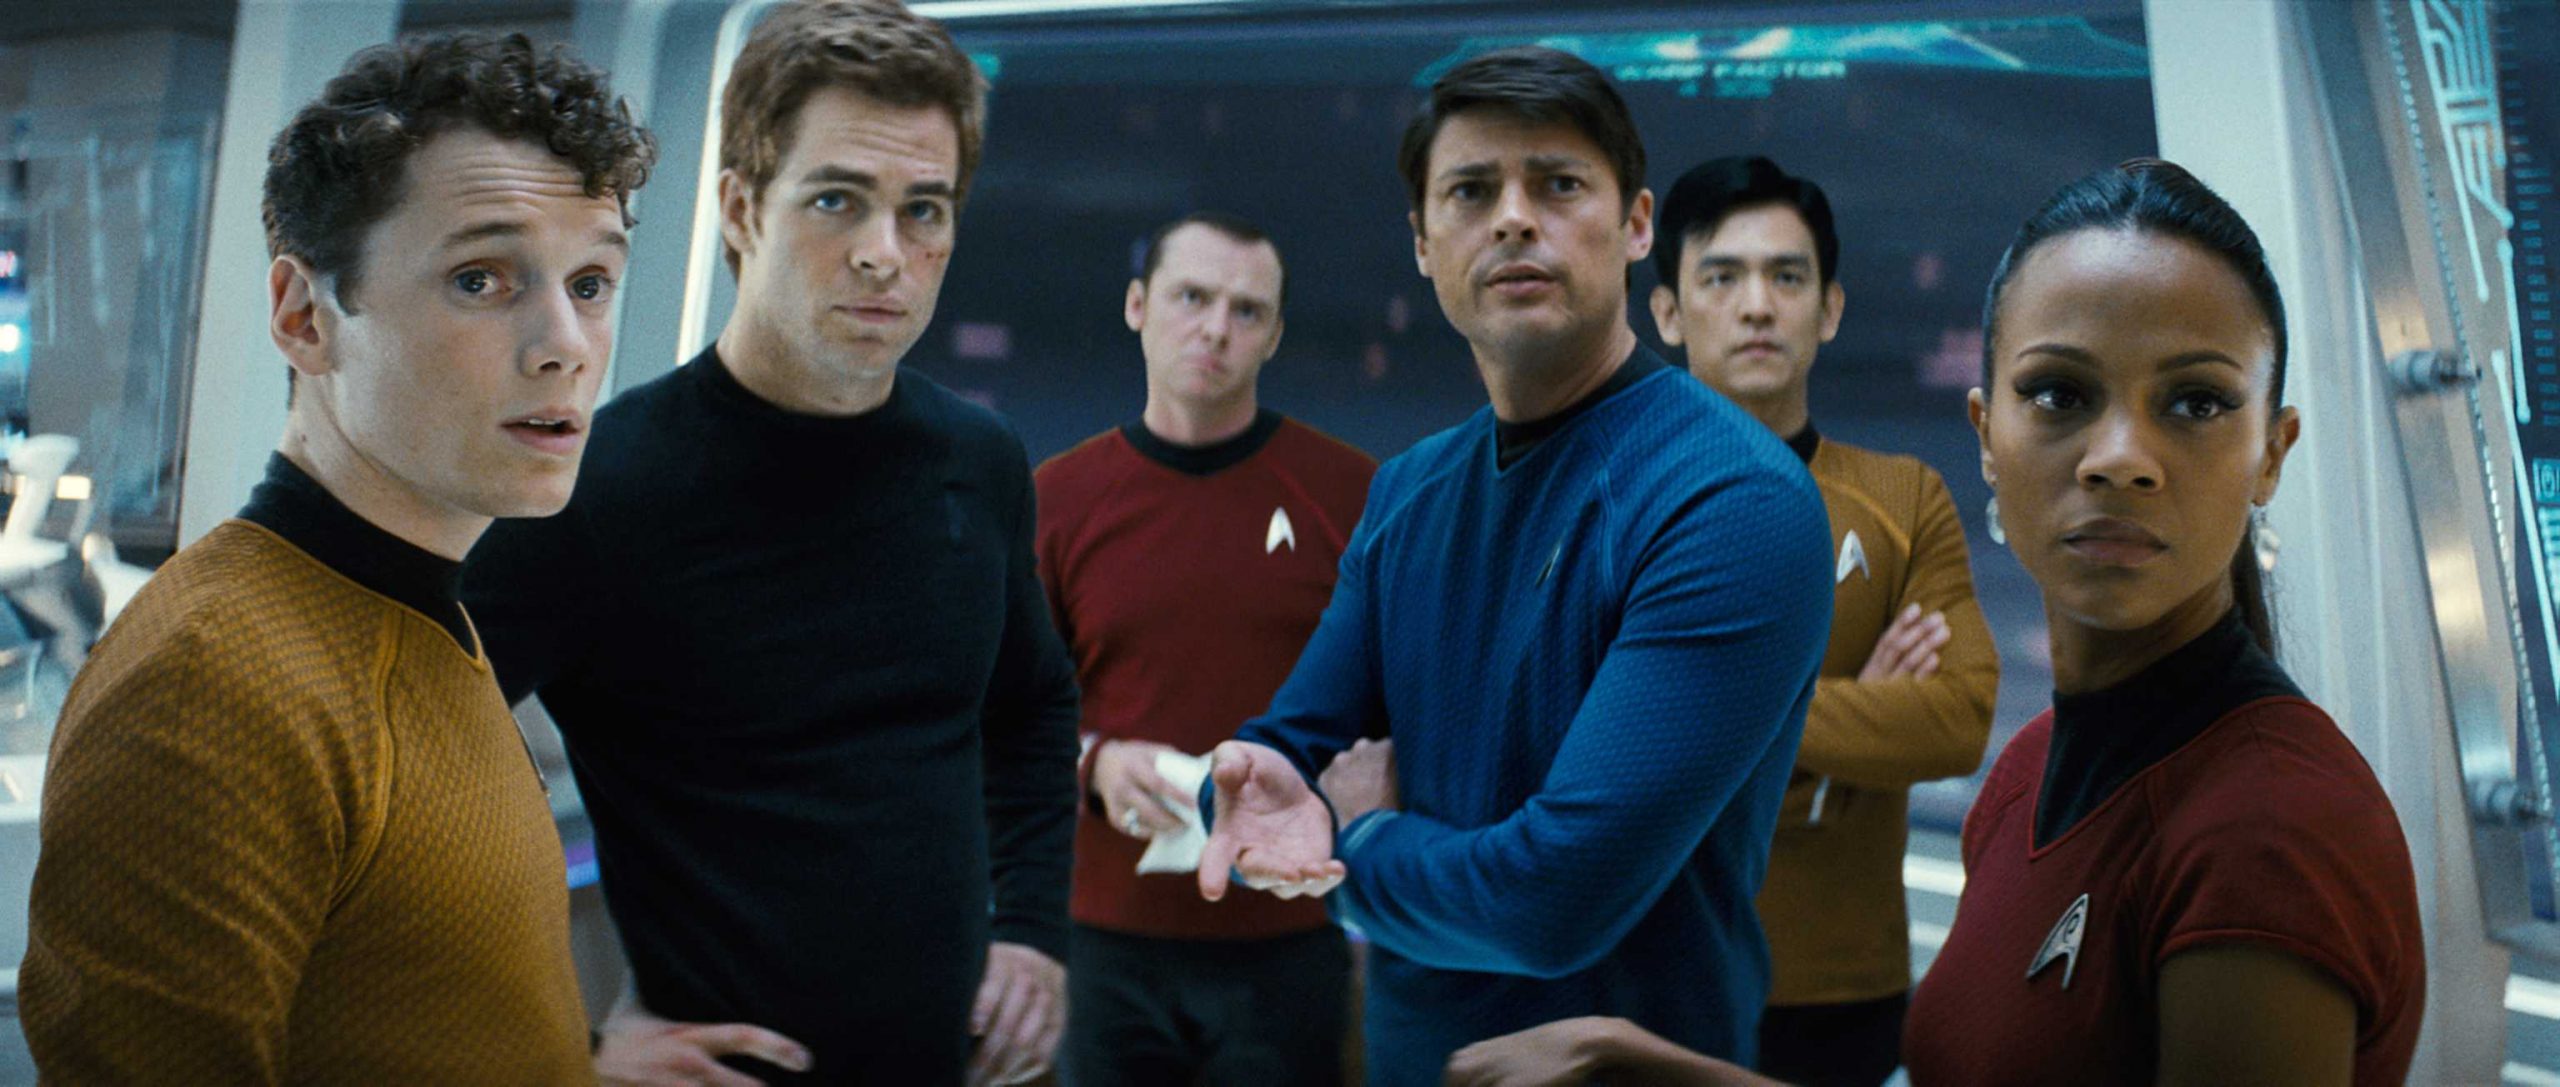 Star Trek Beyond: Here Are The New Starfleet Uniforms